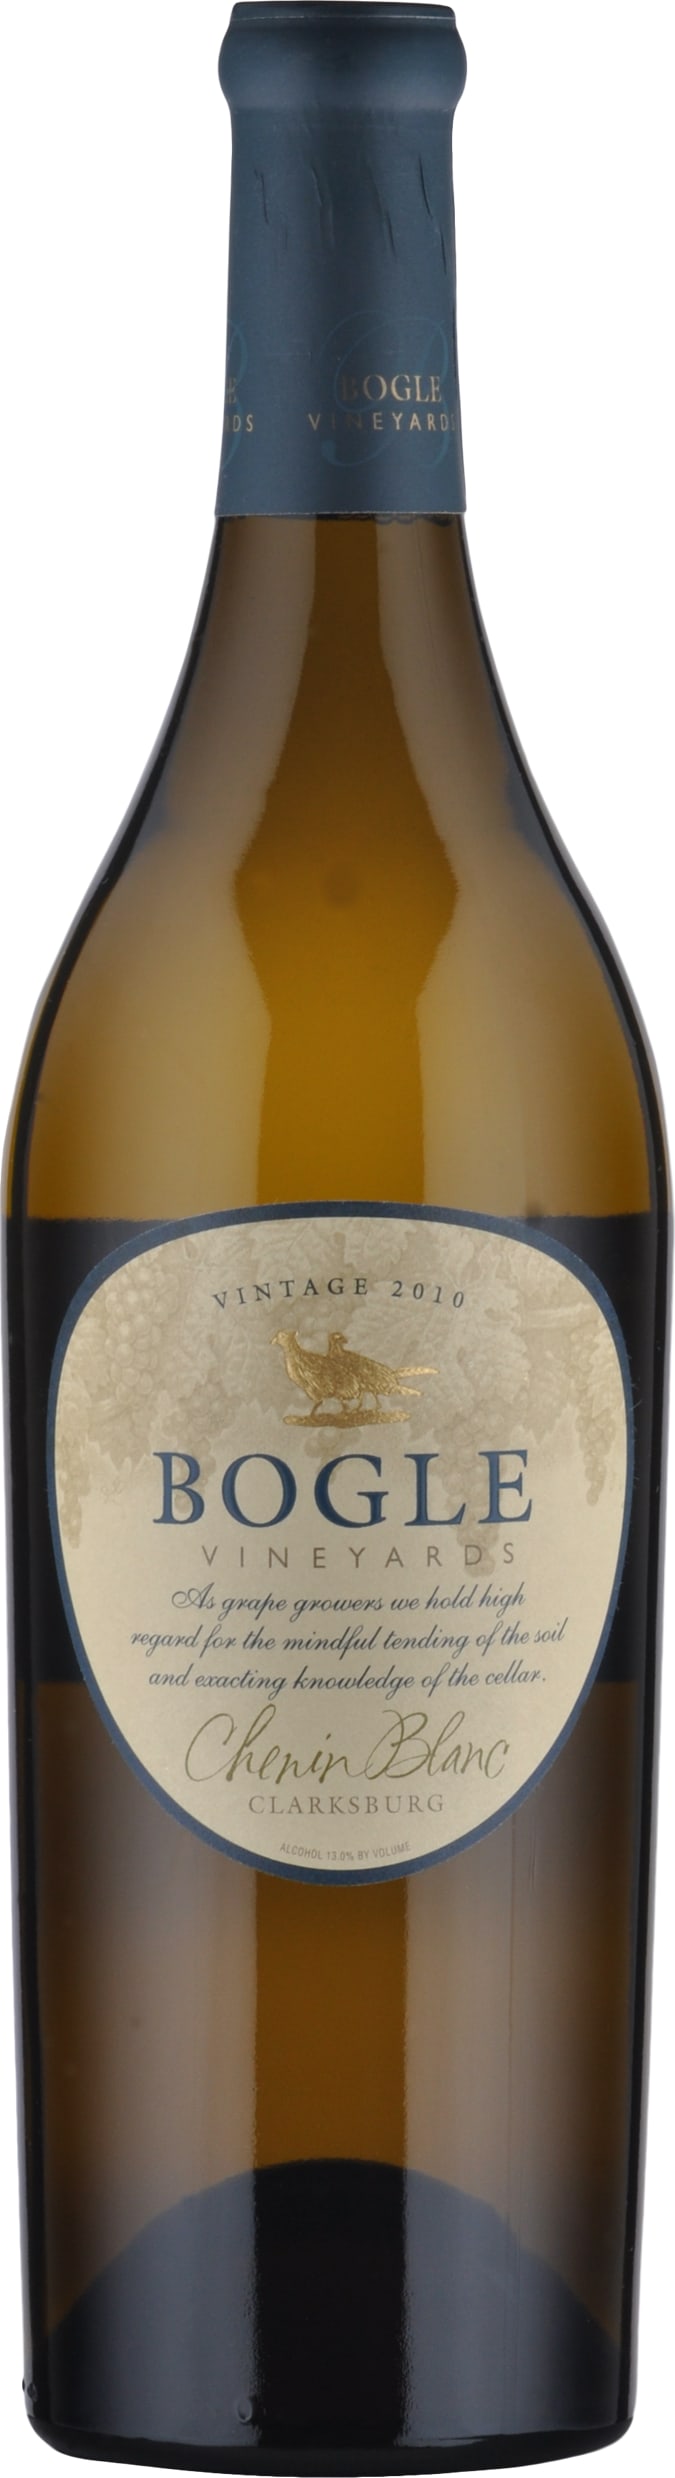 Bogle Family Vineyards Chenin Blanc 2021 75cl - Buy Bogle Family Vineyards Wines from GREAT WINES DIRECT wine shop